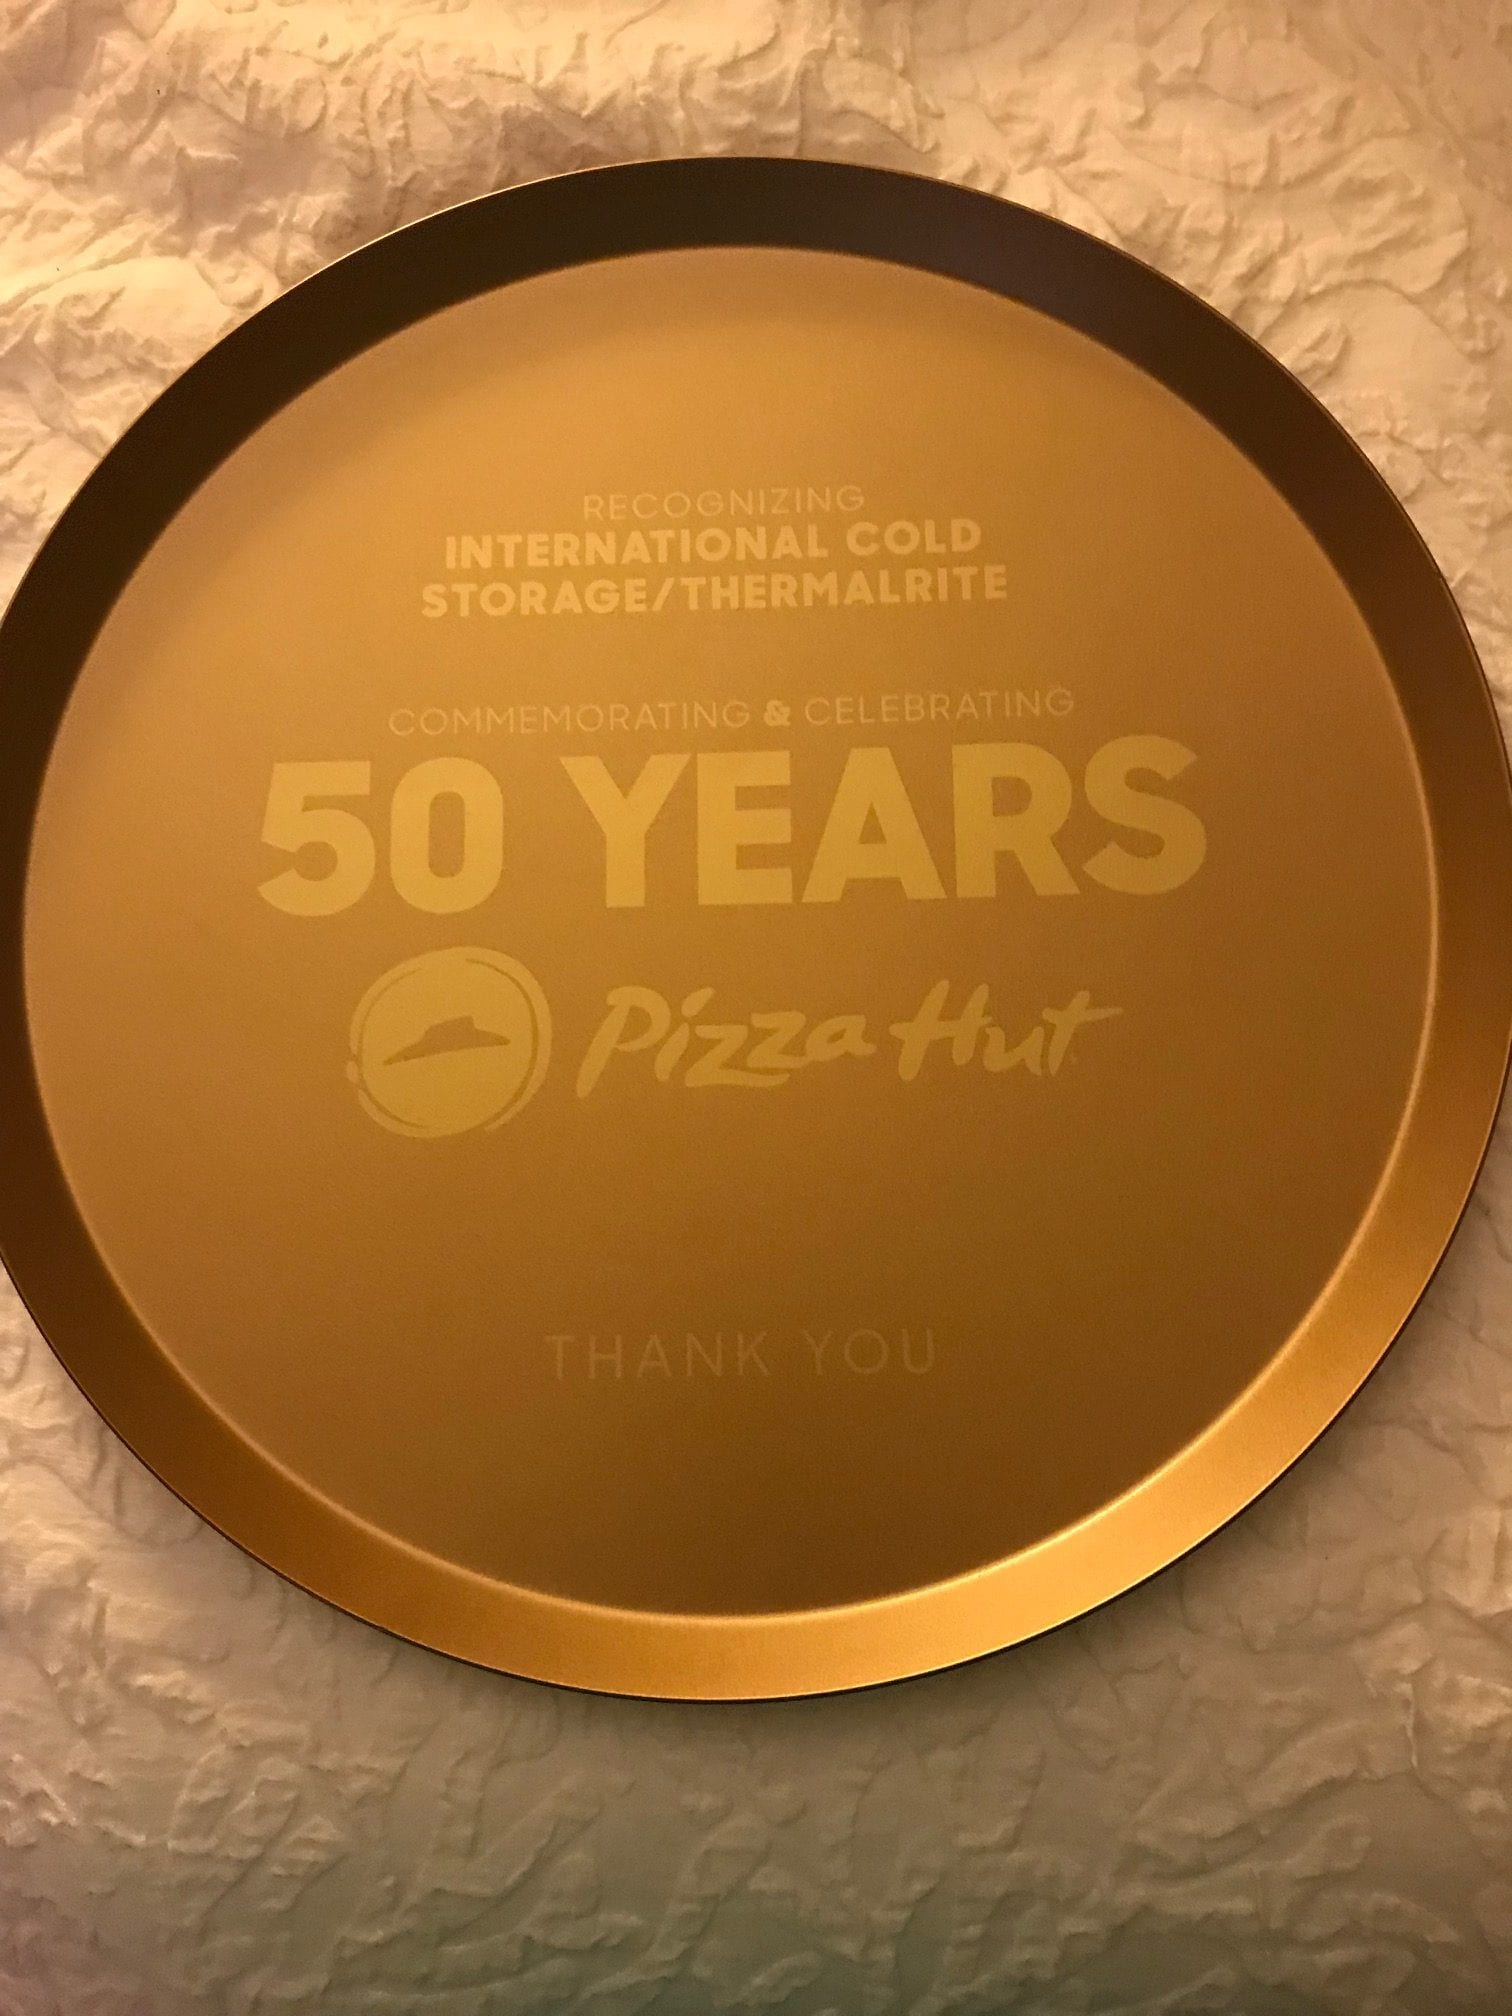 Ics Celebrates 50 Years With Pizza Hut Everidge